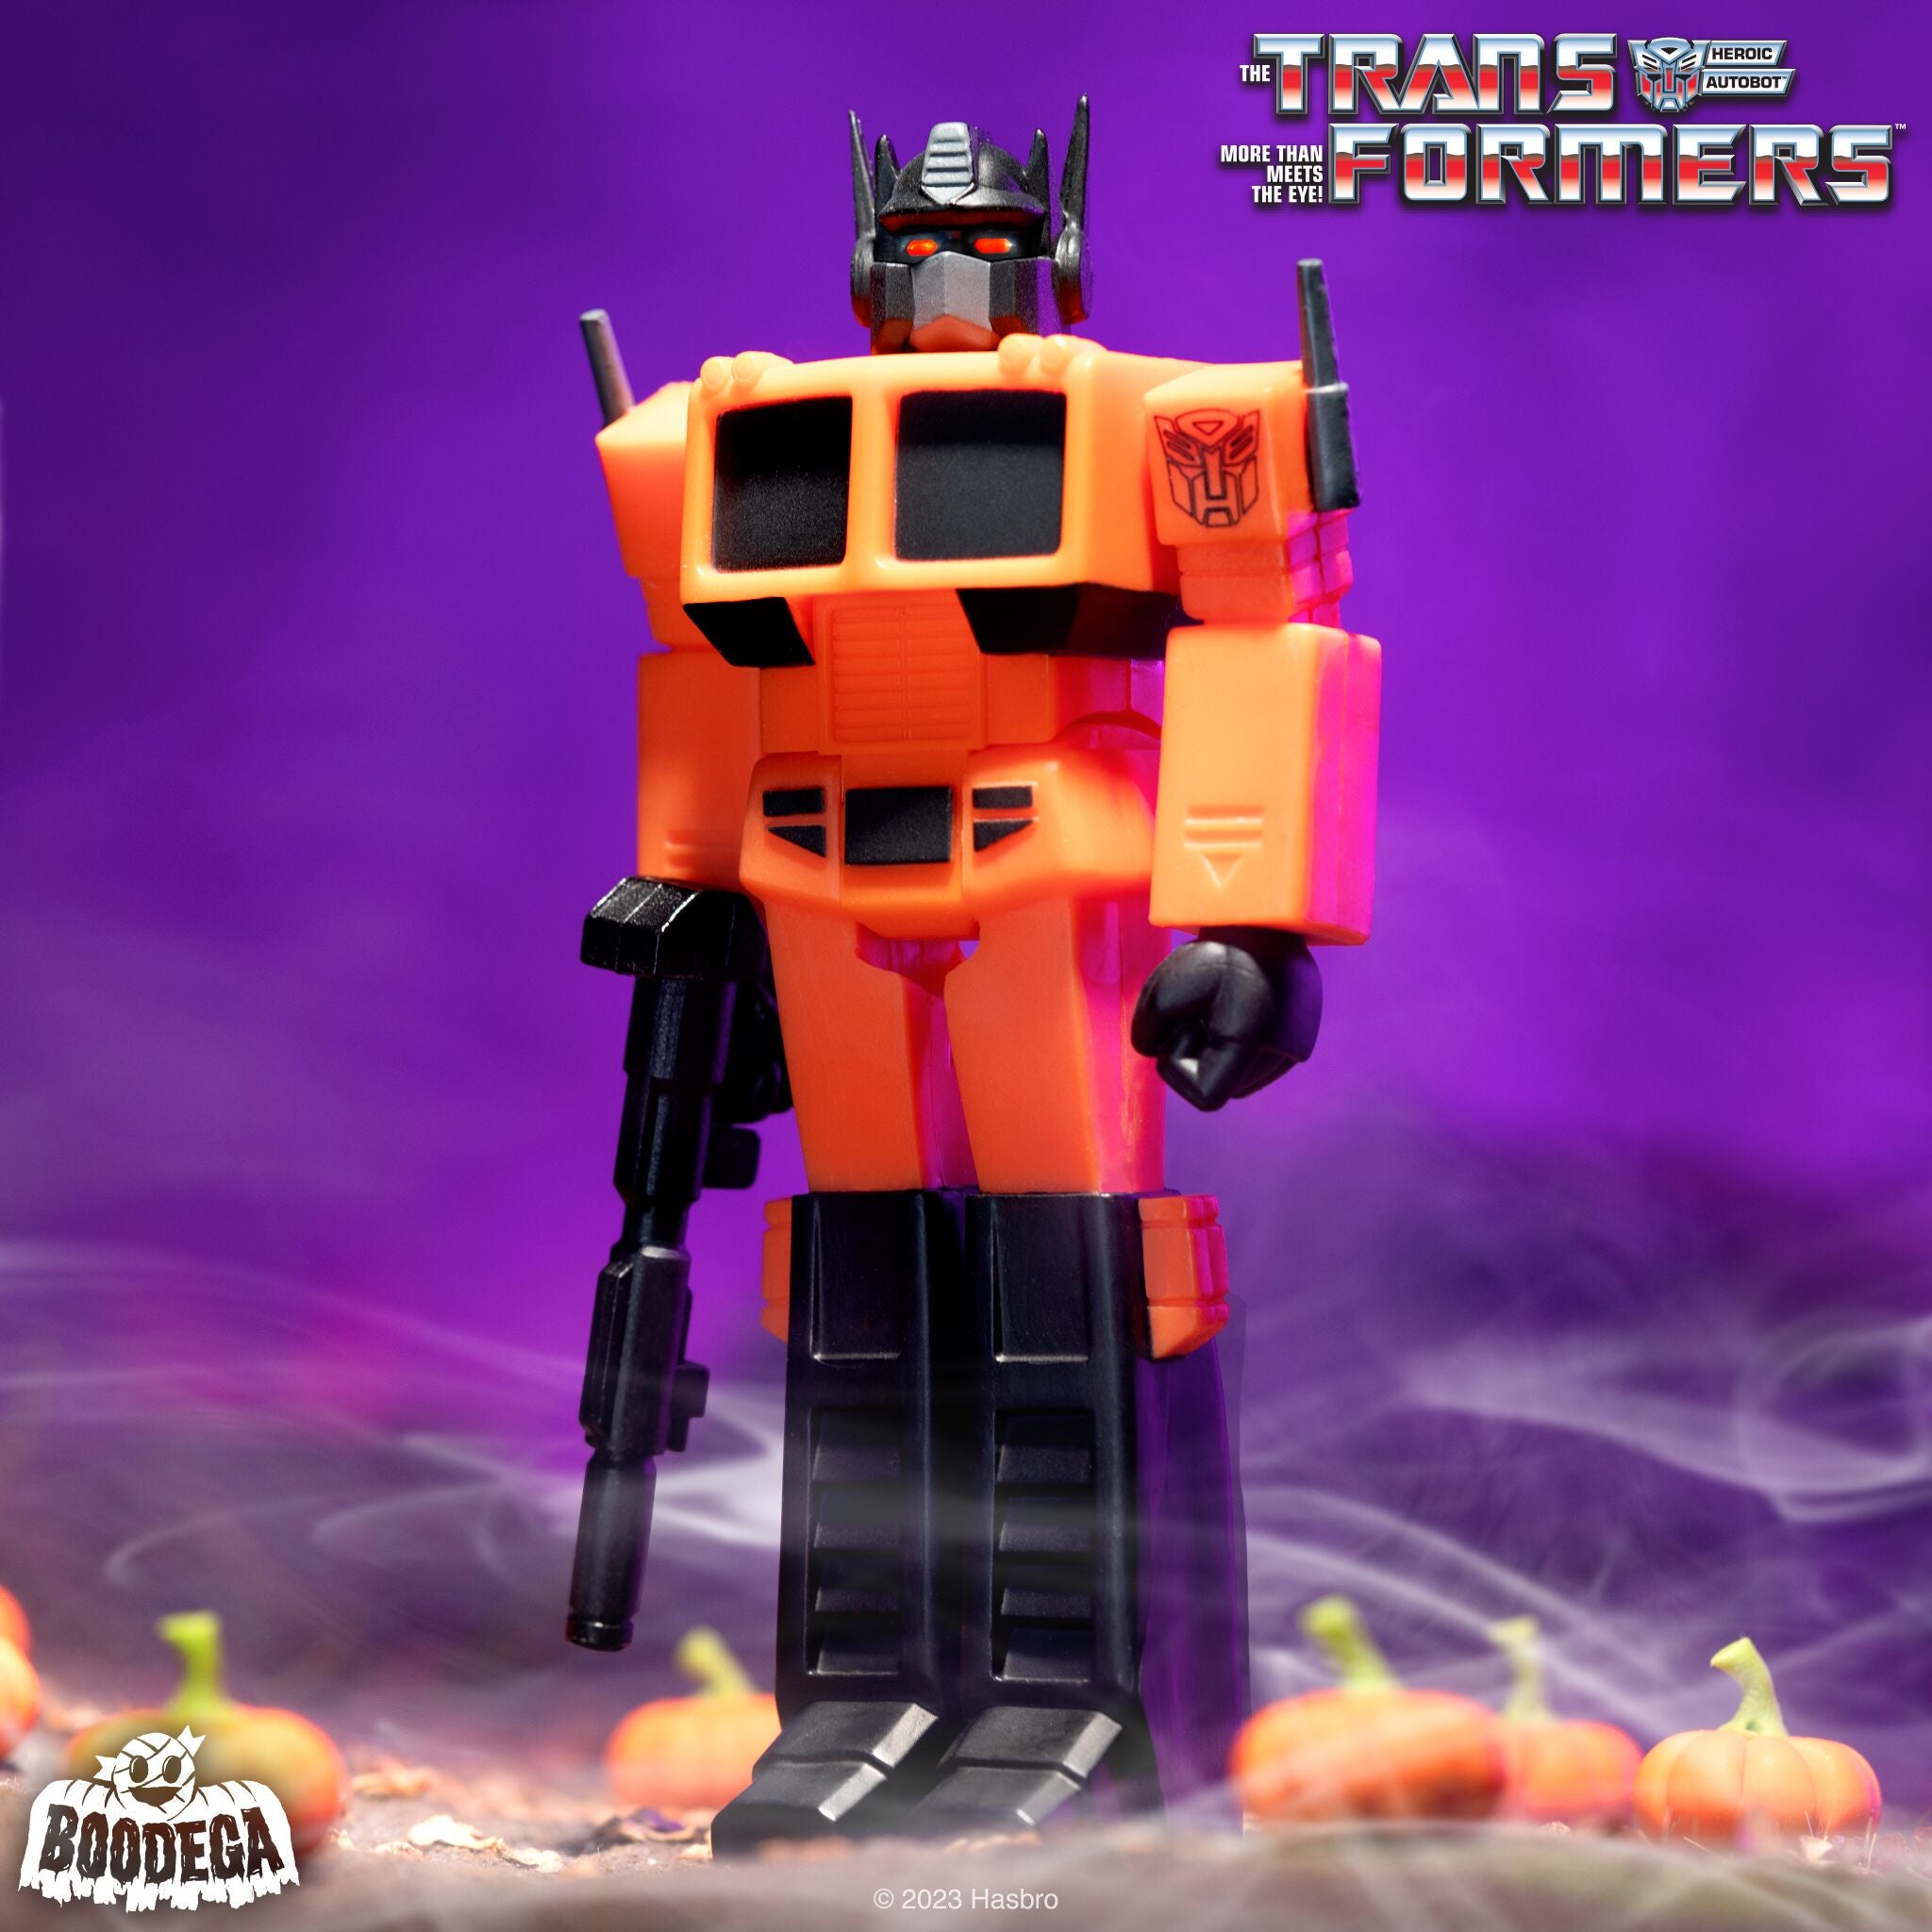 Transformers ReAction Figure - Optimus Prime (Orange/Black)